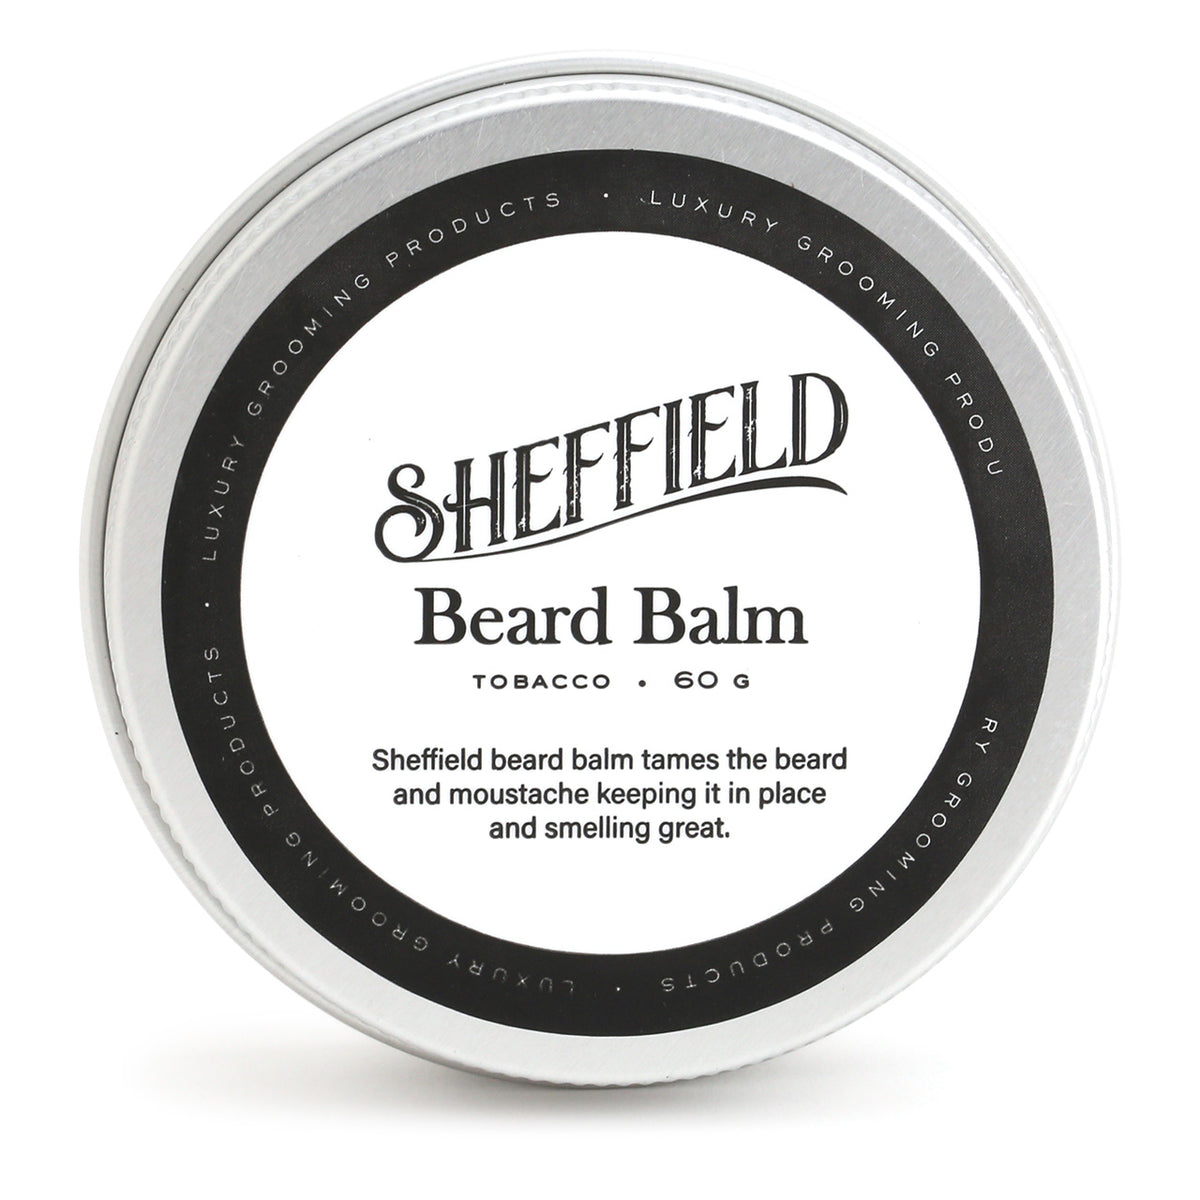 Sheffield Beard Balm 60g, Tobacco. Top view of tin